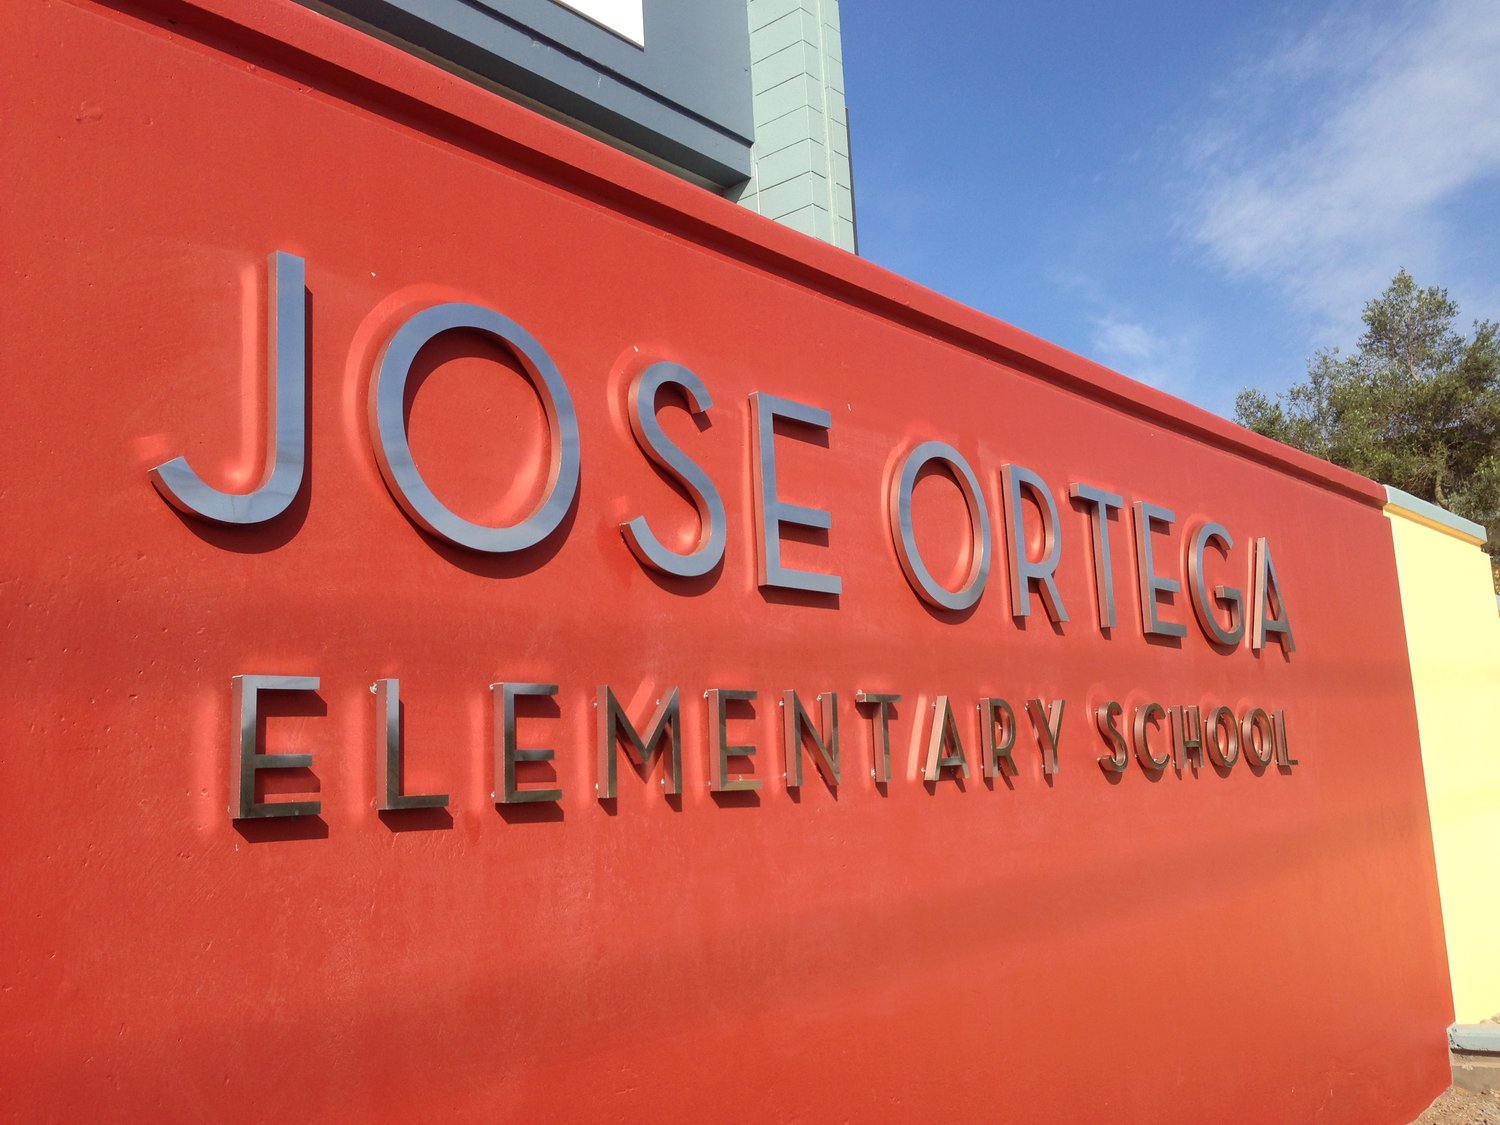 Can Koozie (Single) — Jose Ortega Elementary School